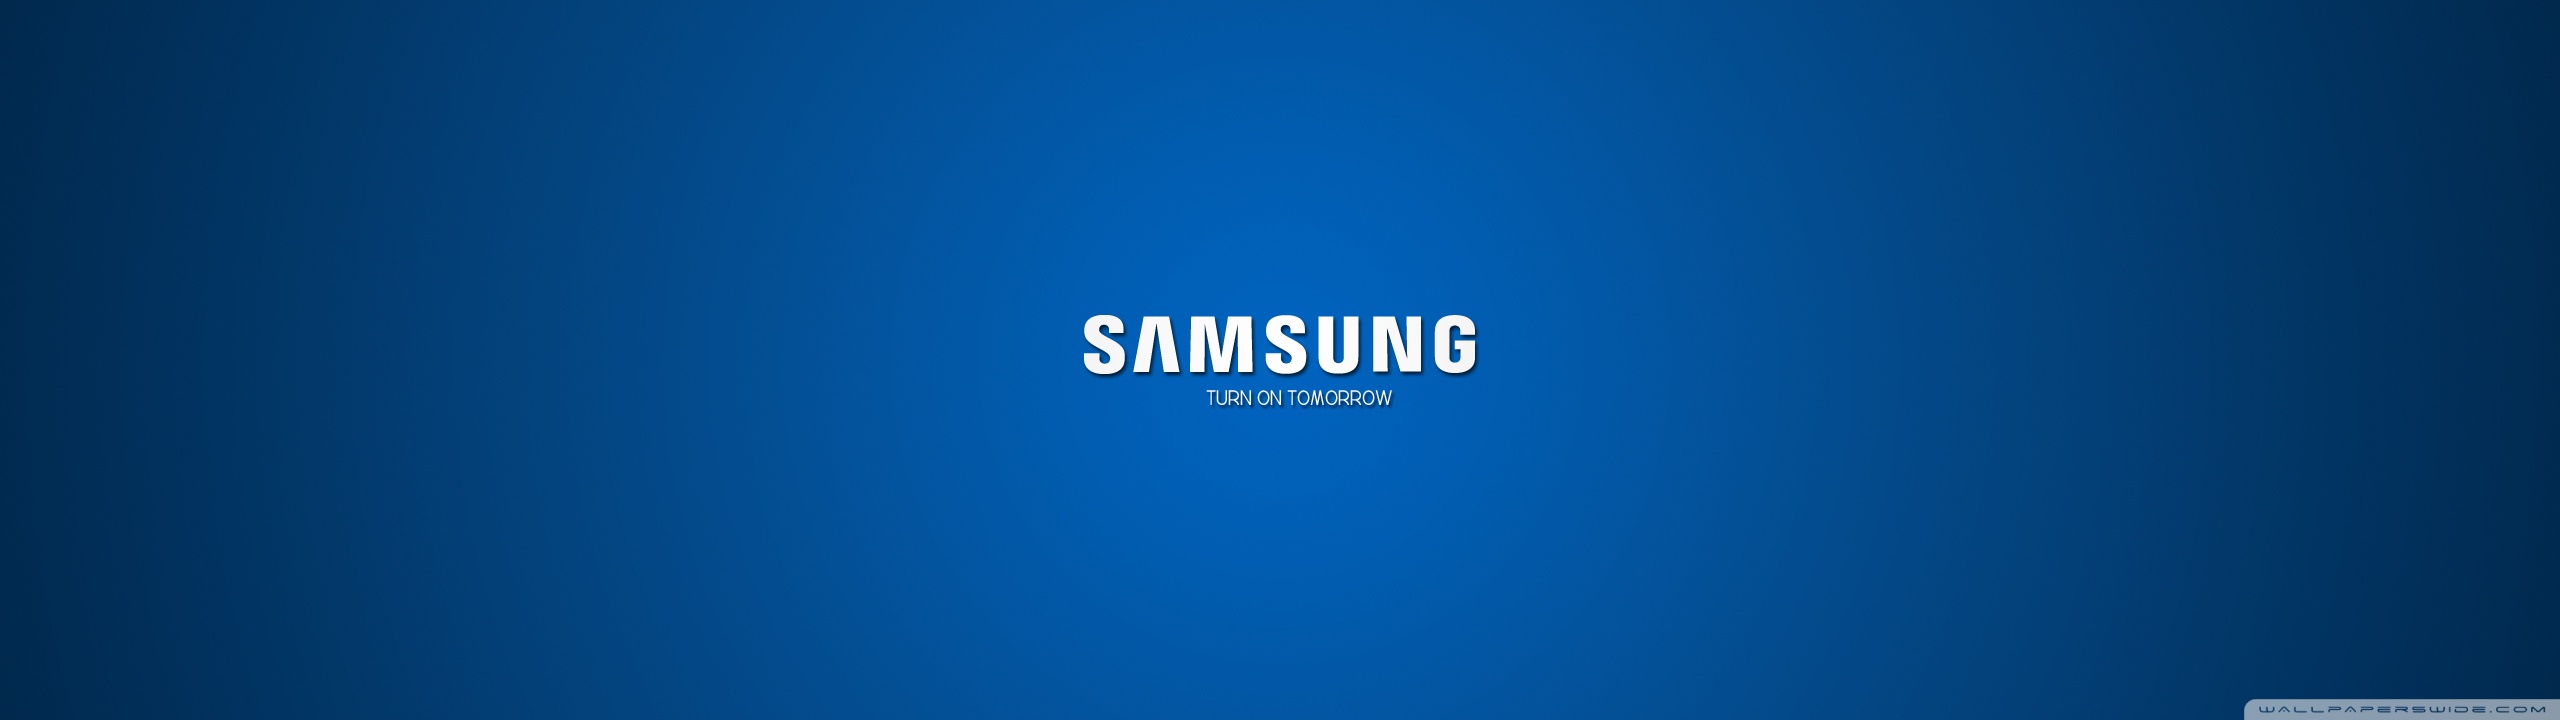 Samsung Turn On Tomorrow Ultra HD Desktop Background Wallpaper for 4K ...